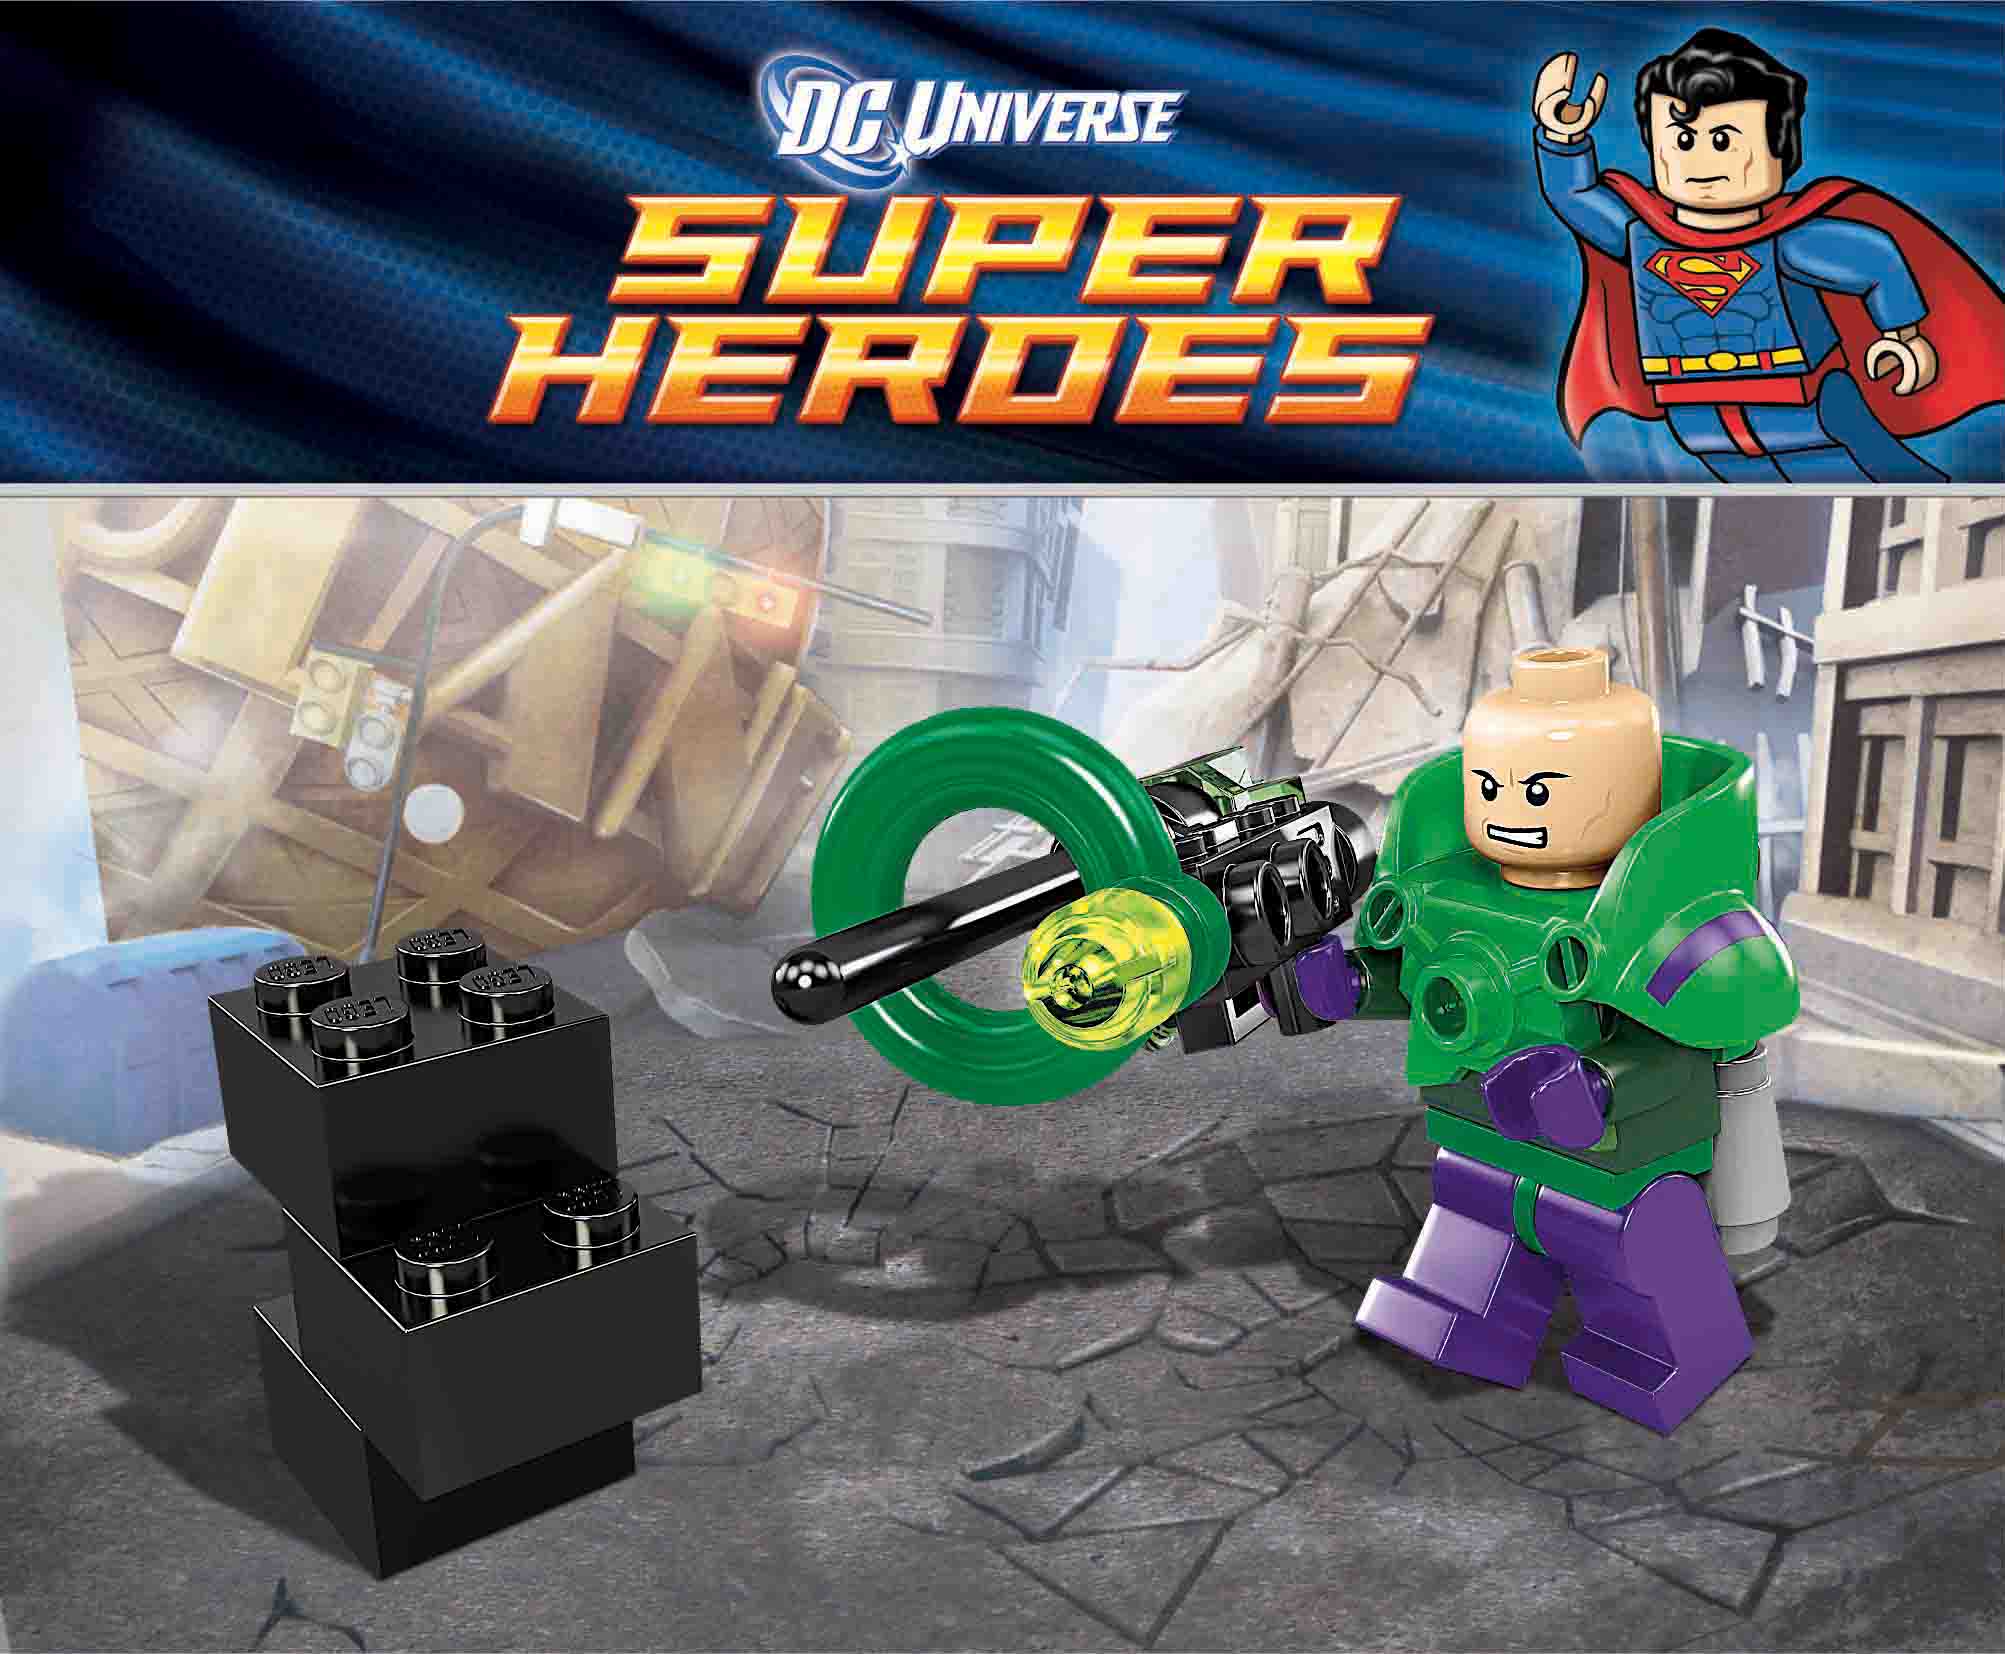 Lego Batman 2 - Unlocking Lex and 6X Red Brick 